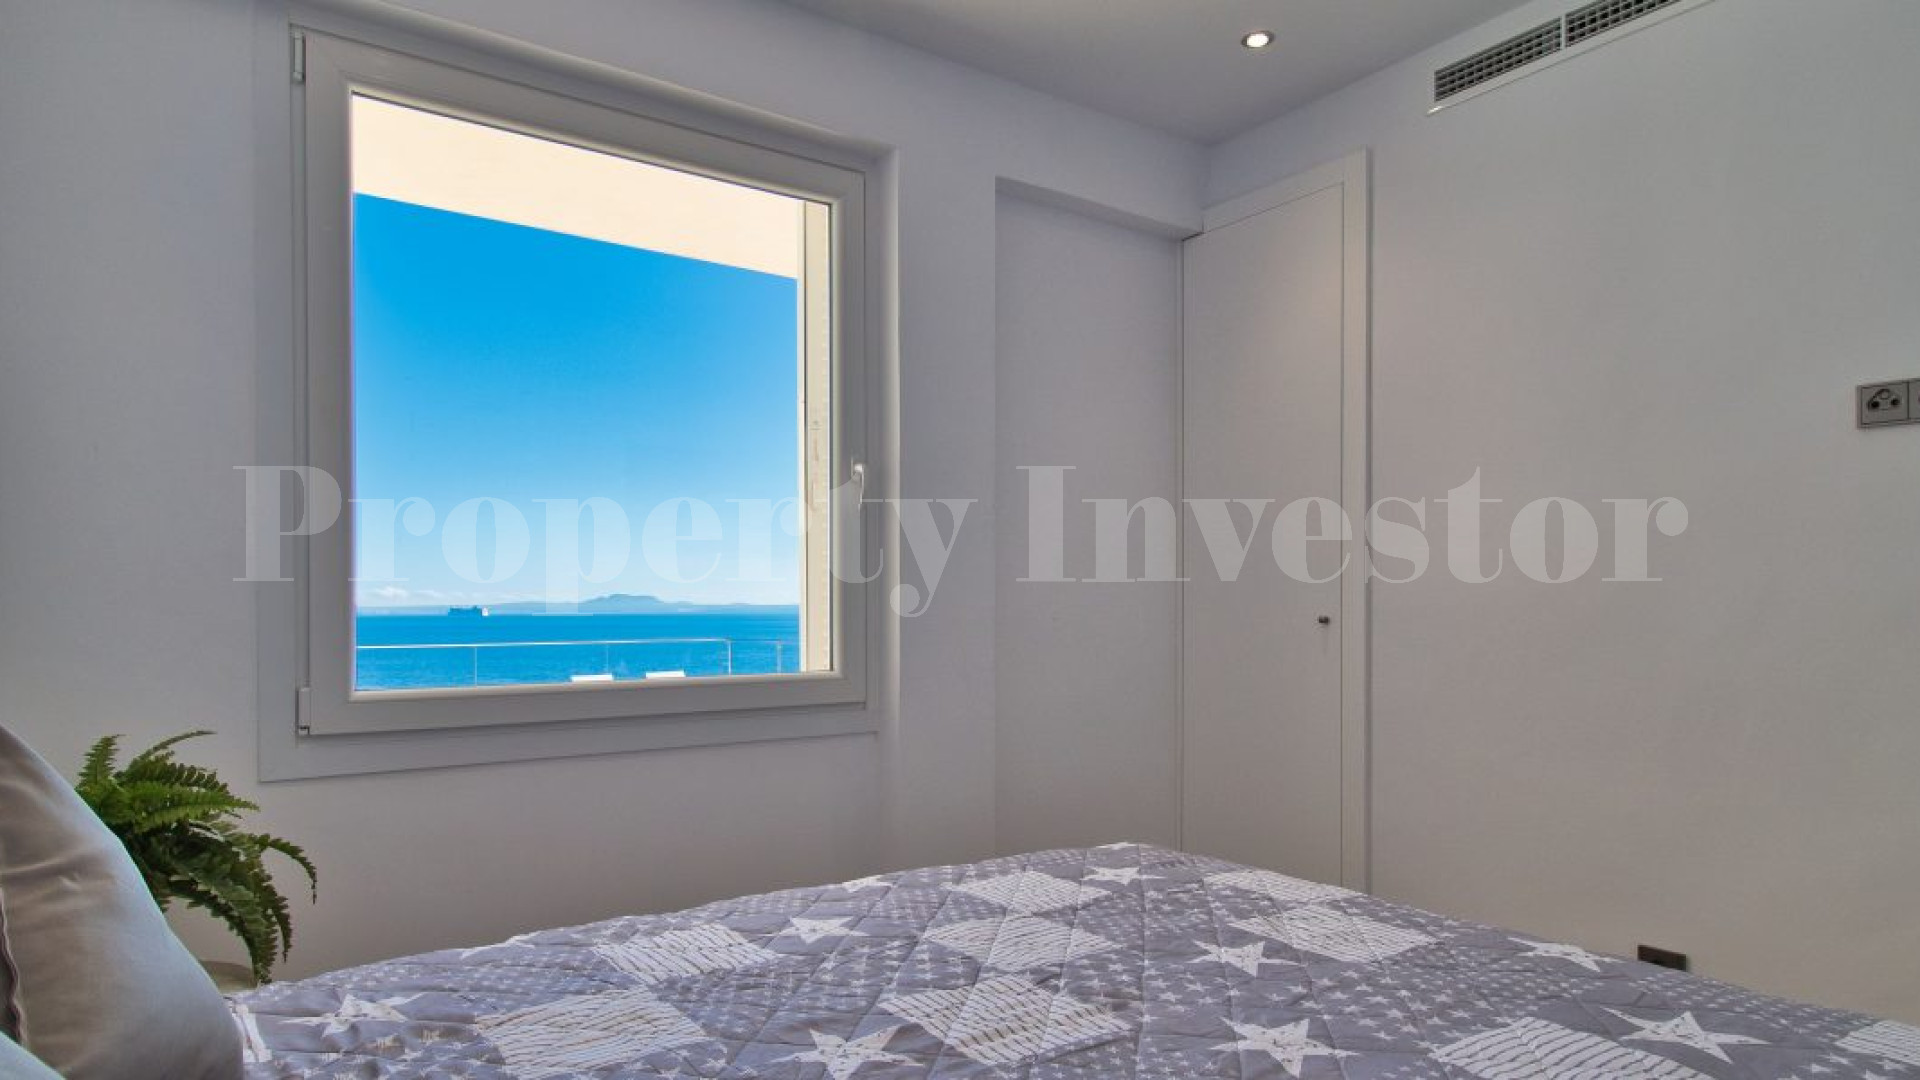 3 Bedroom Duplex Apartment with Incredible Sea Views in Cala Vinyas